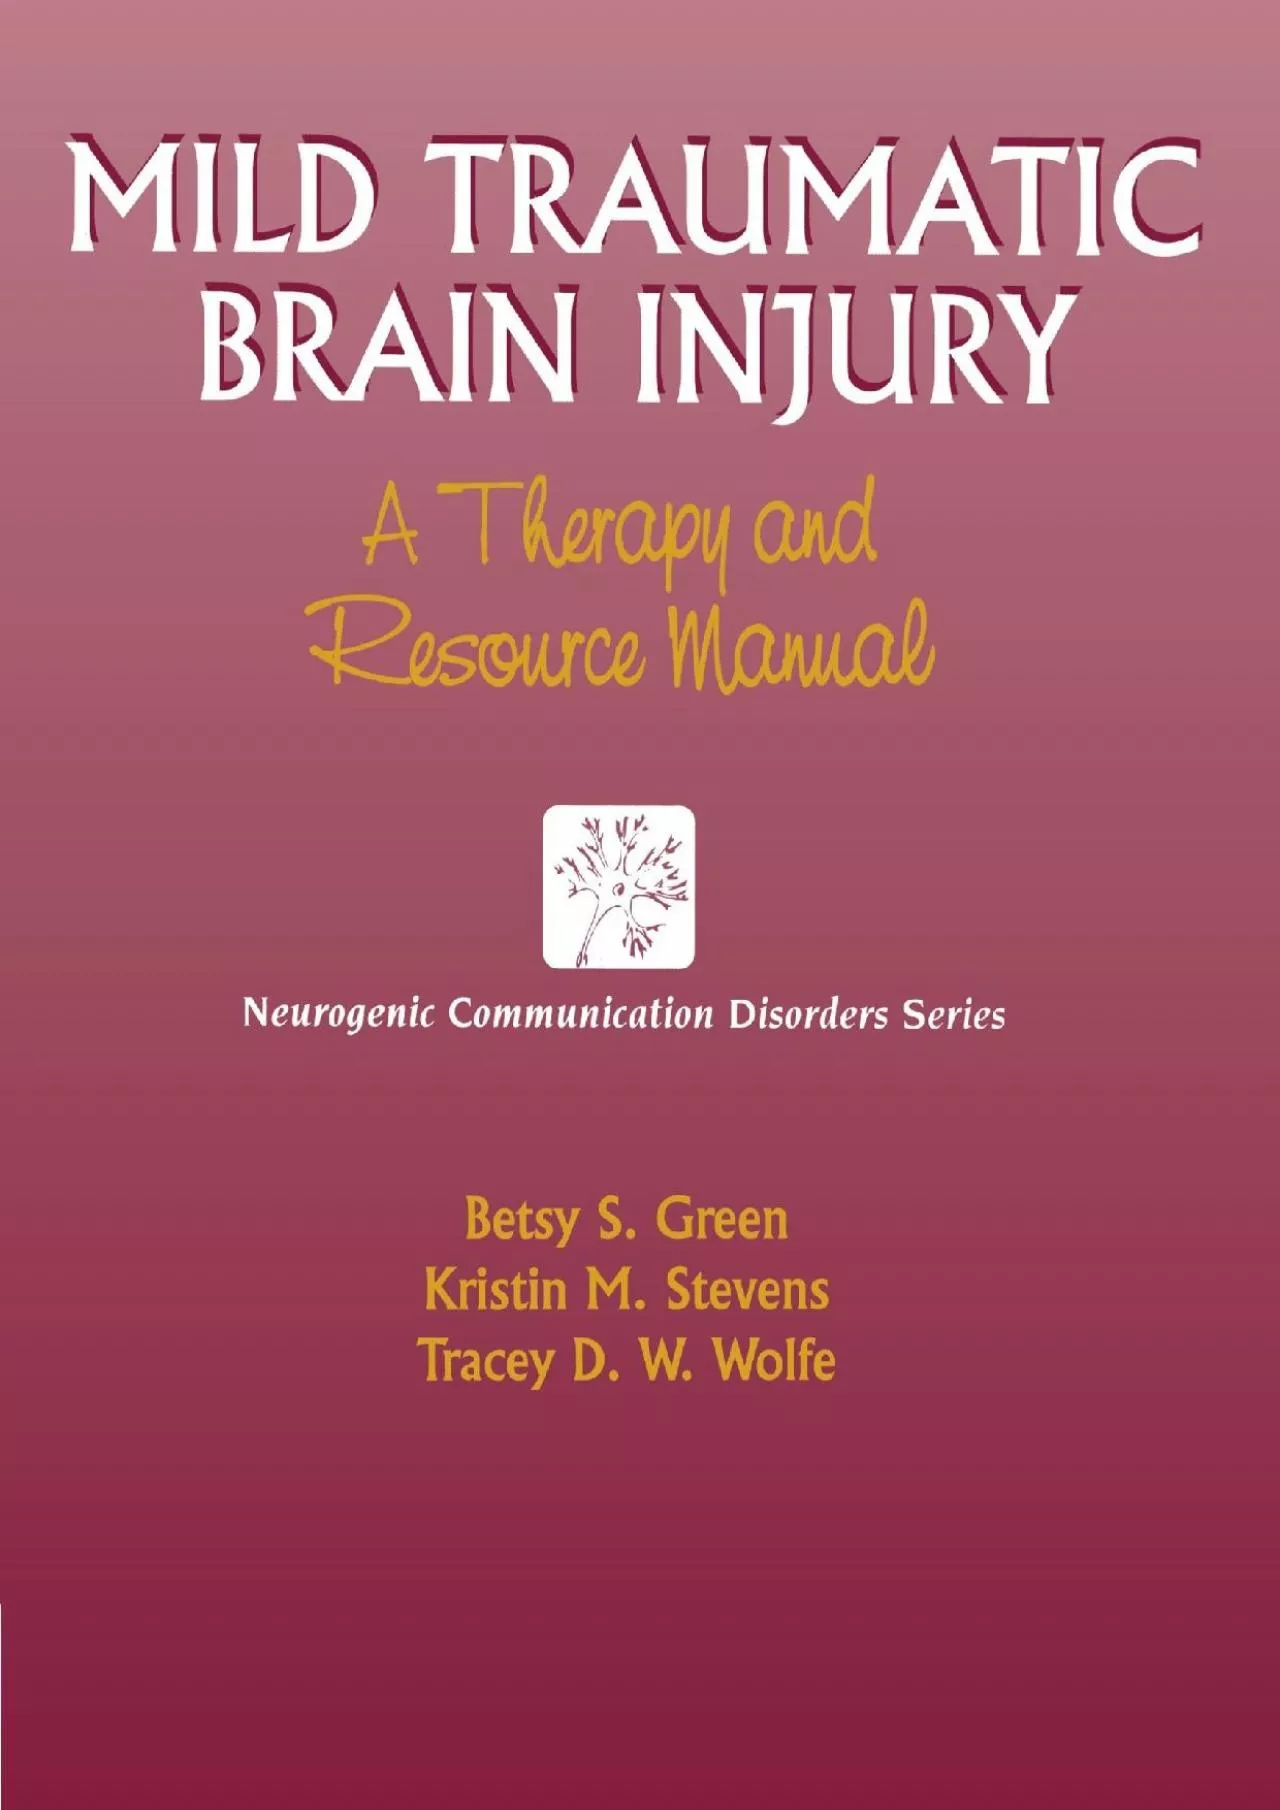 (DOWNLOAD)-Mild Traumatic Brain Injury: A Therapy and Resource Manual (Neurogenic Communication